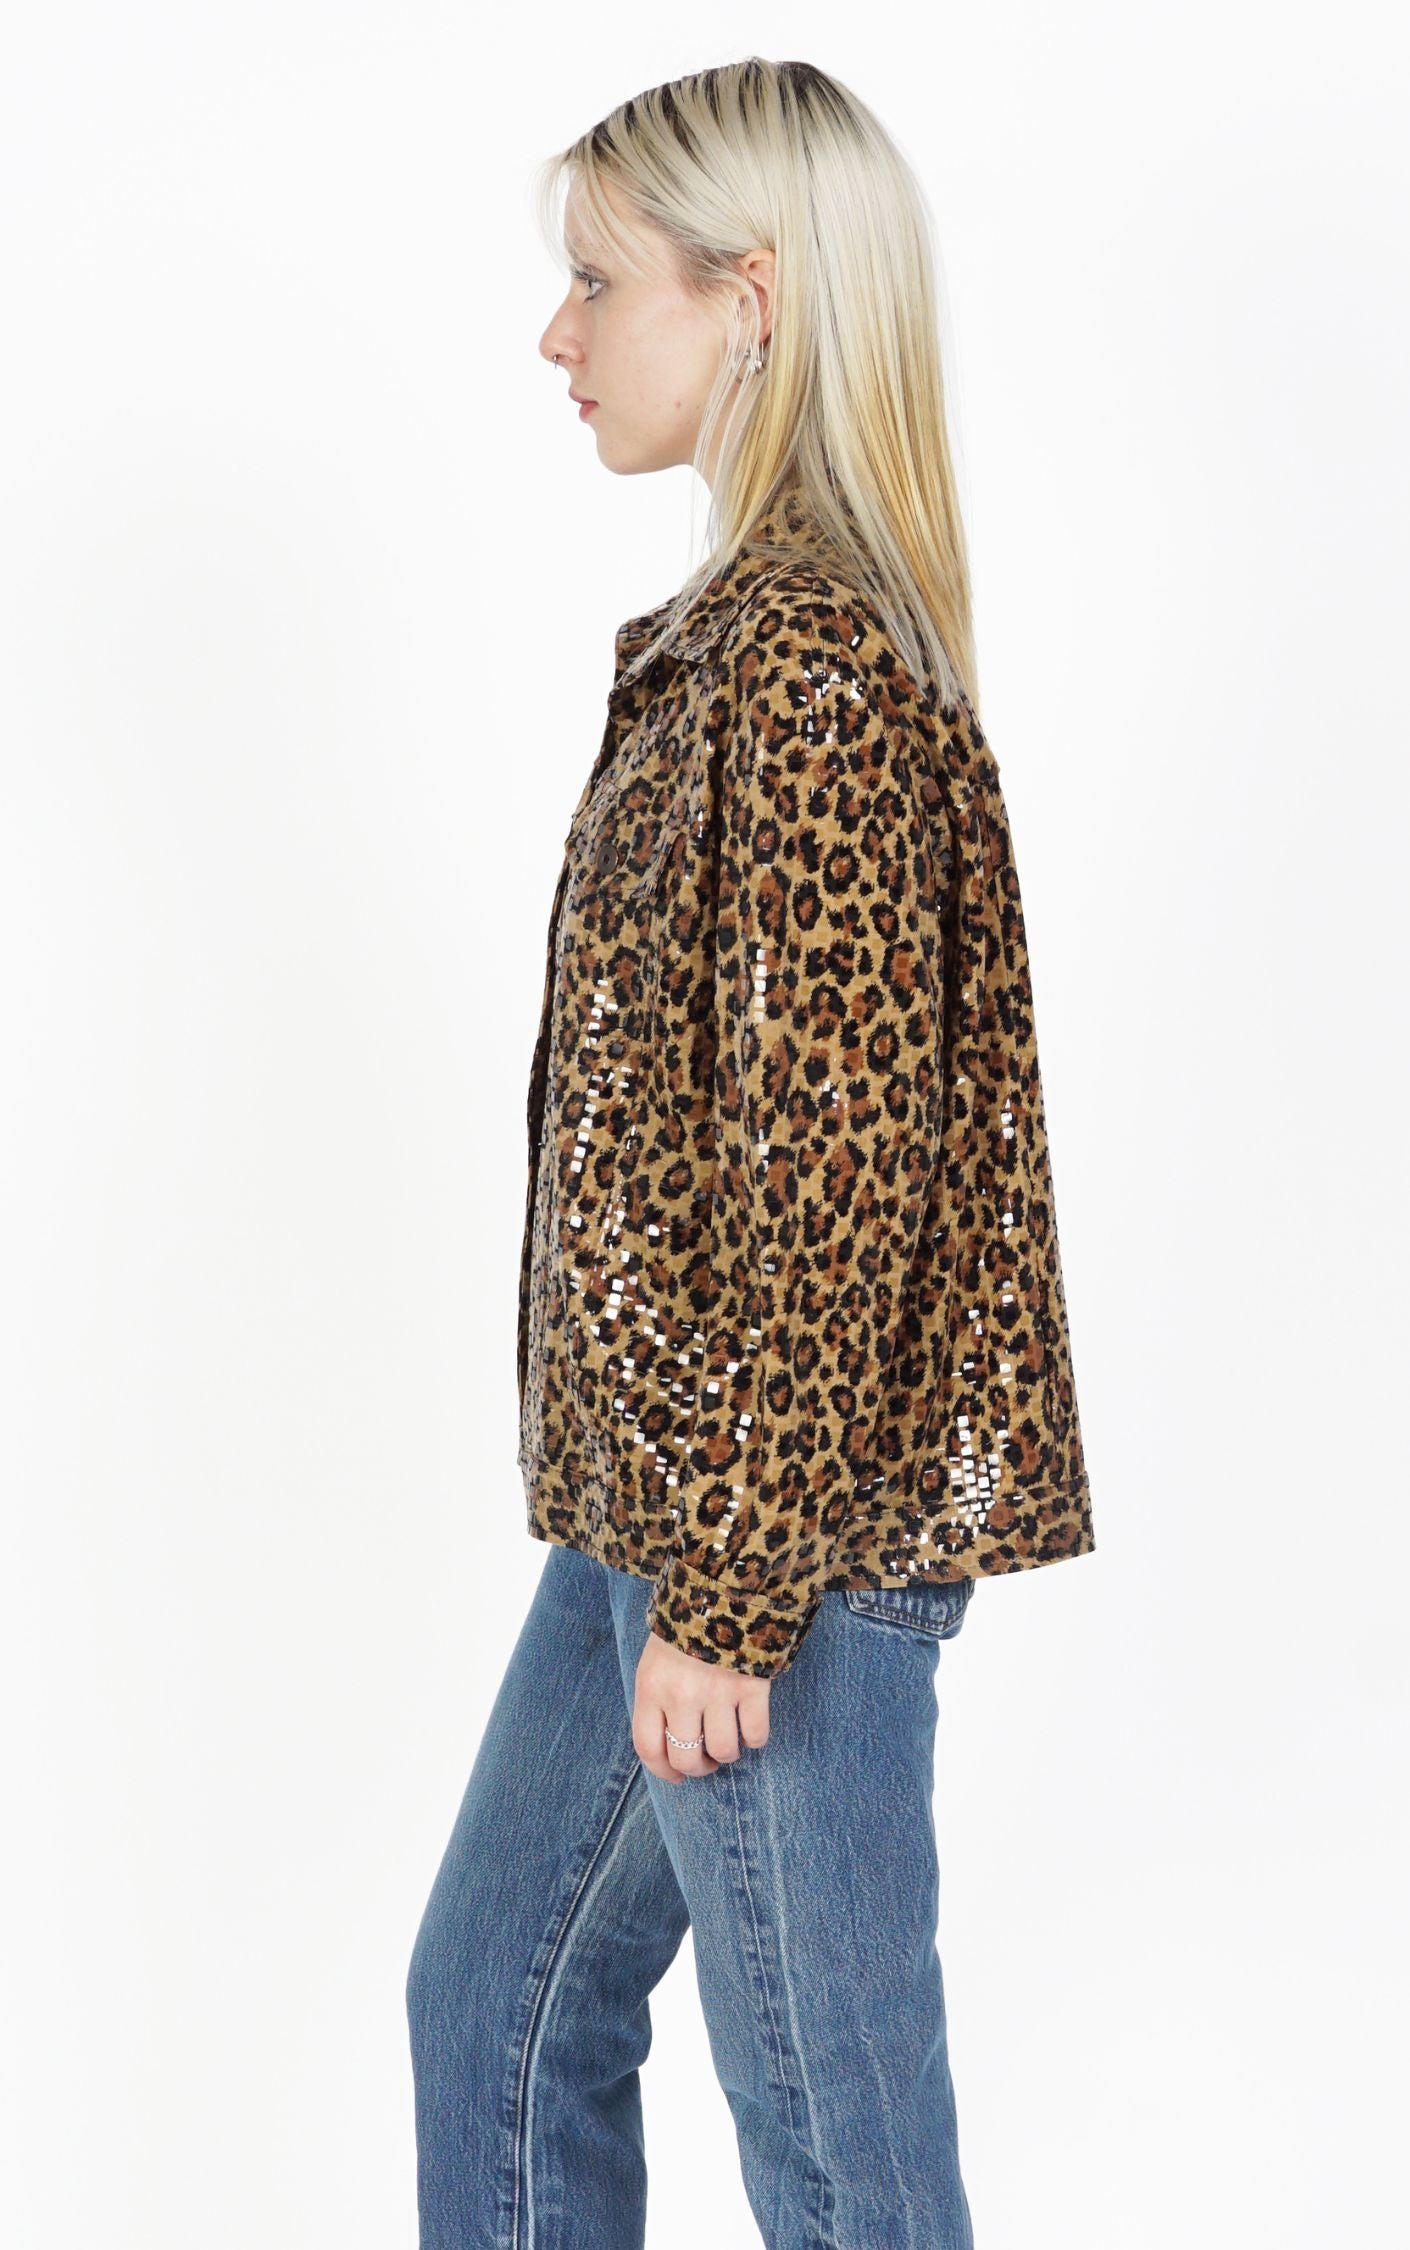 Y2K Cheetah Leopard Animal Print Sequin Pockets Button Down Shirt resellum